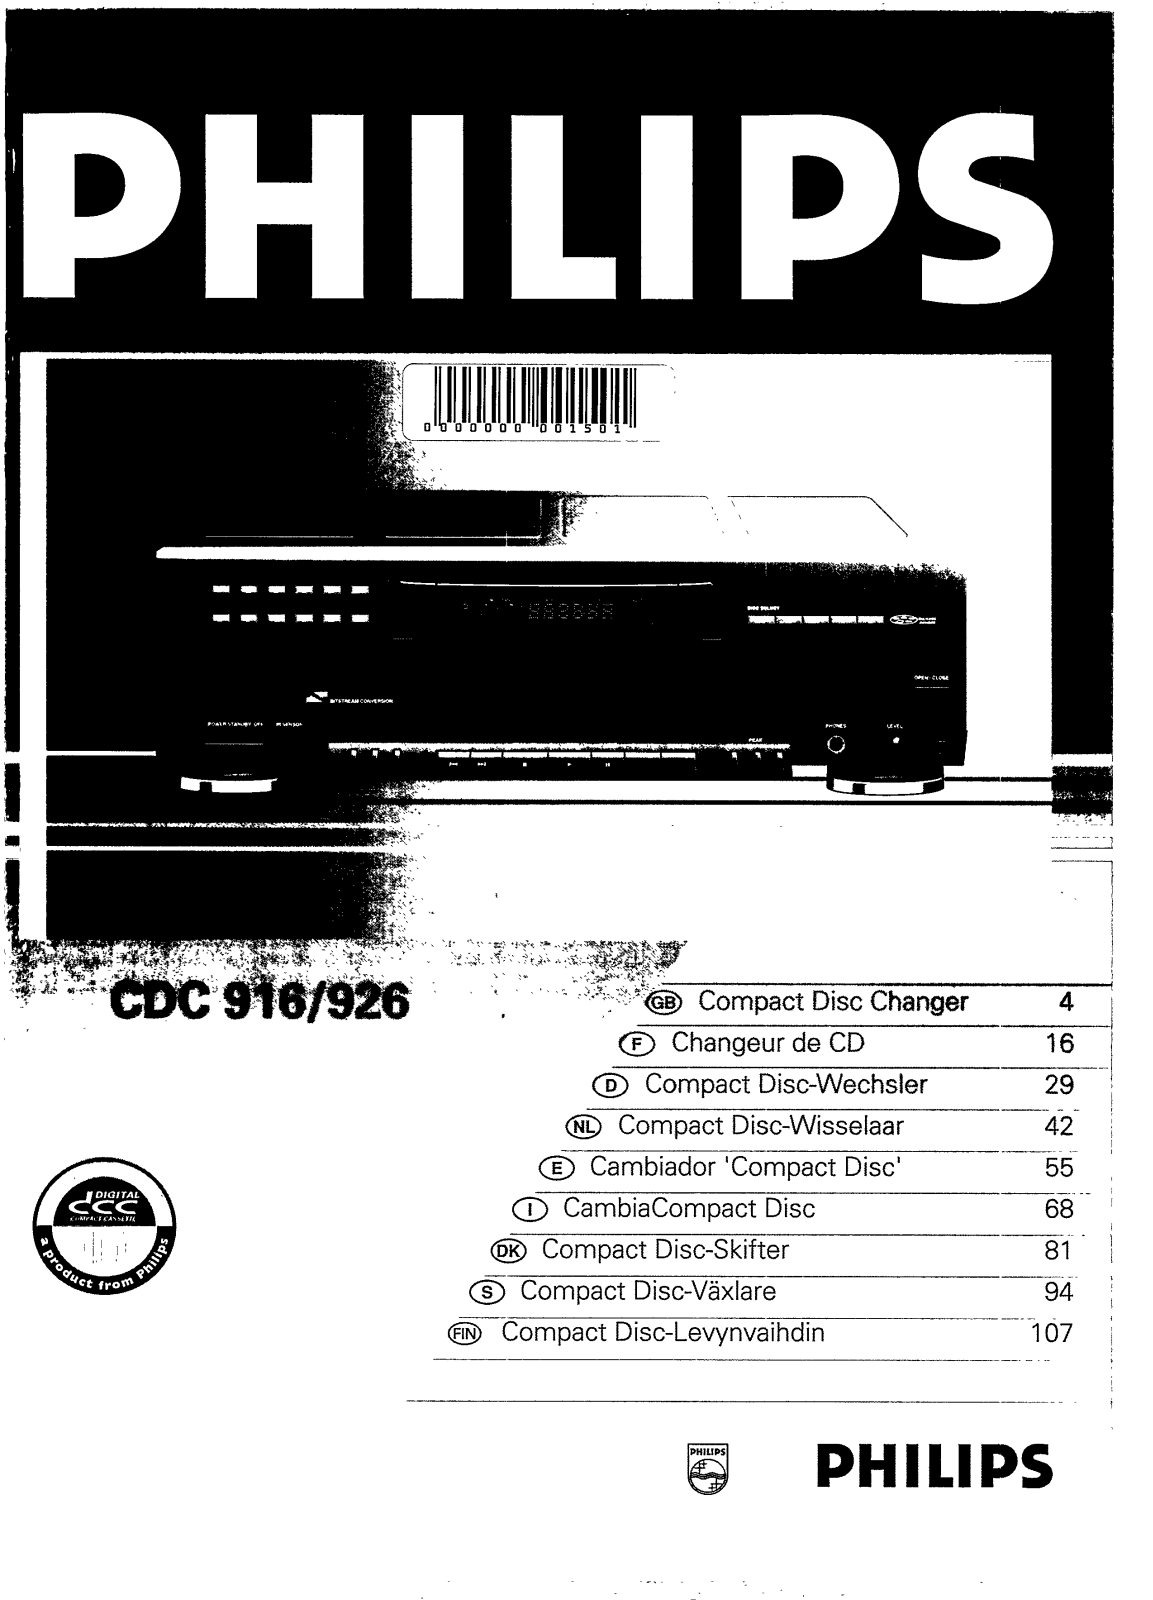 Philips CDC926/00S, CDC926, CDC916/00S, CDC916 User Manual